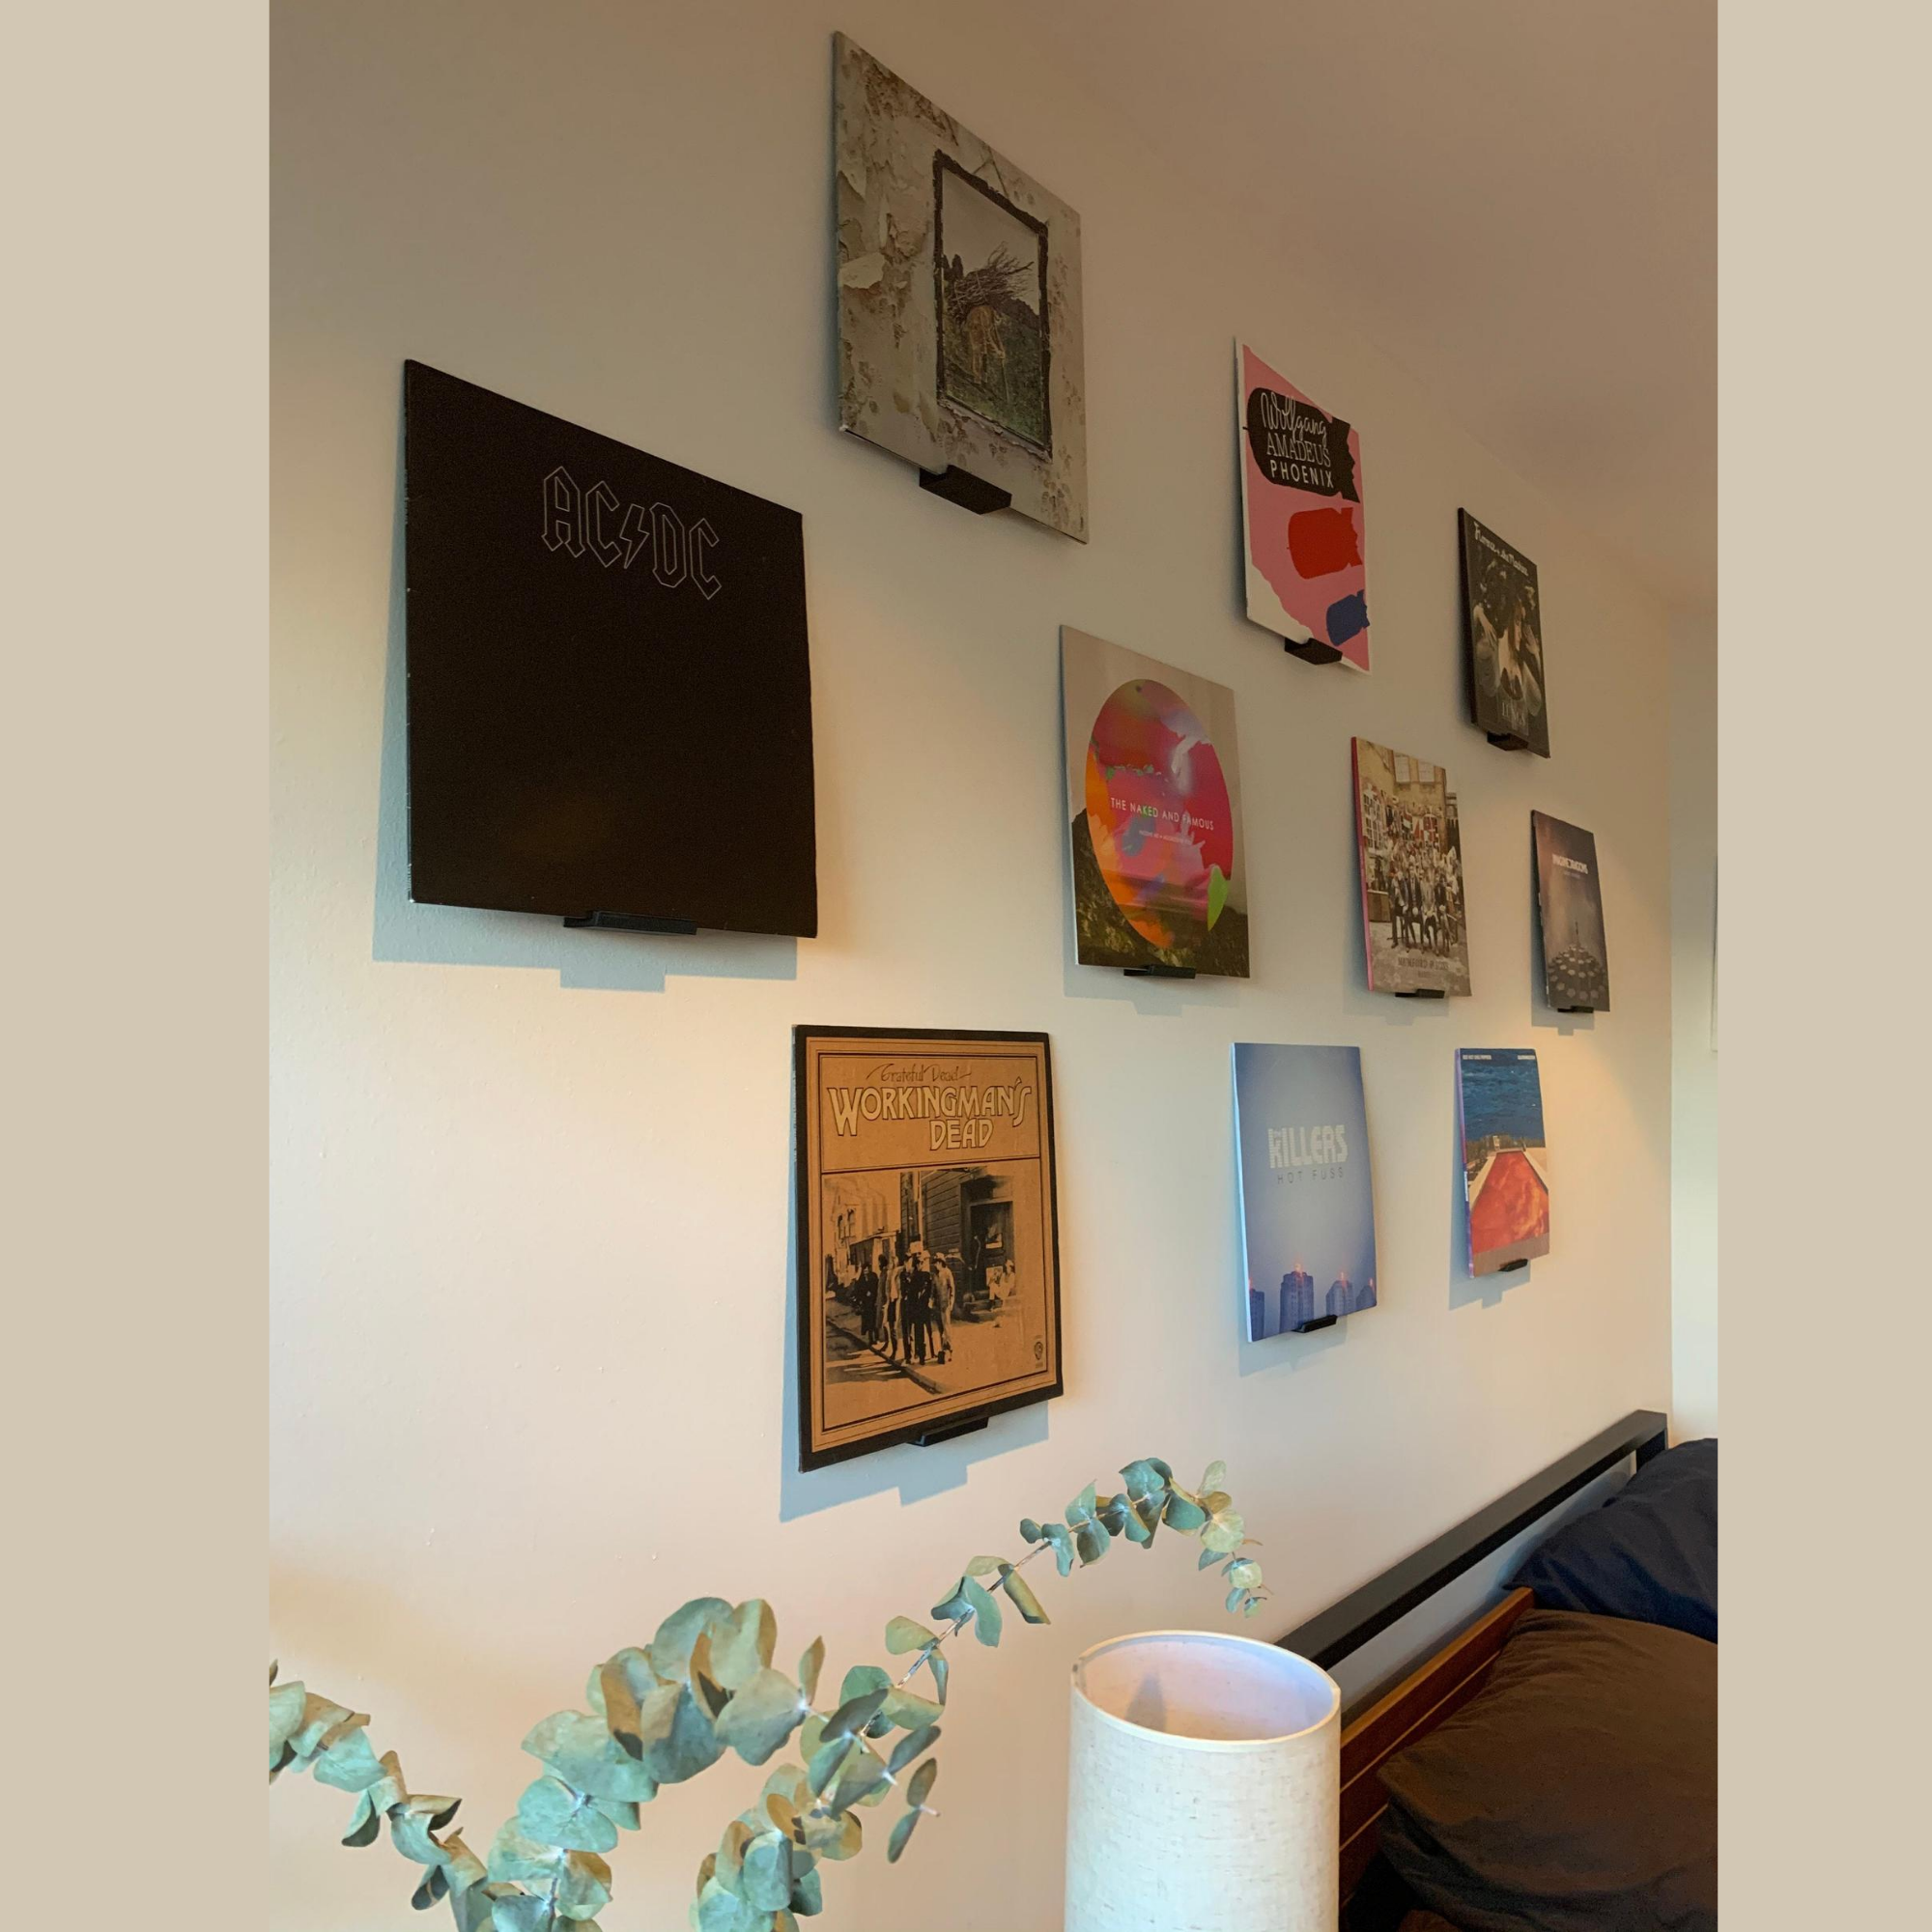 Shelf Vinyl Record Album Wall Display & Mount, Damage- Free